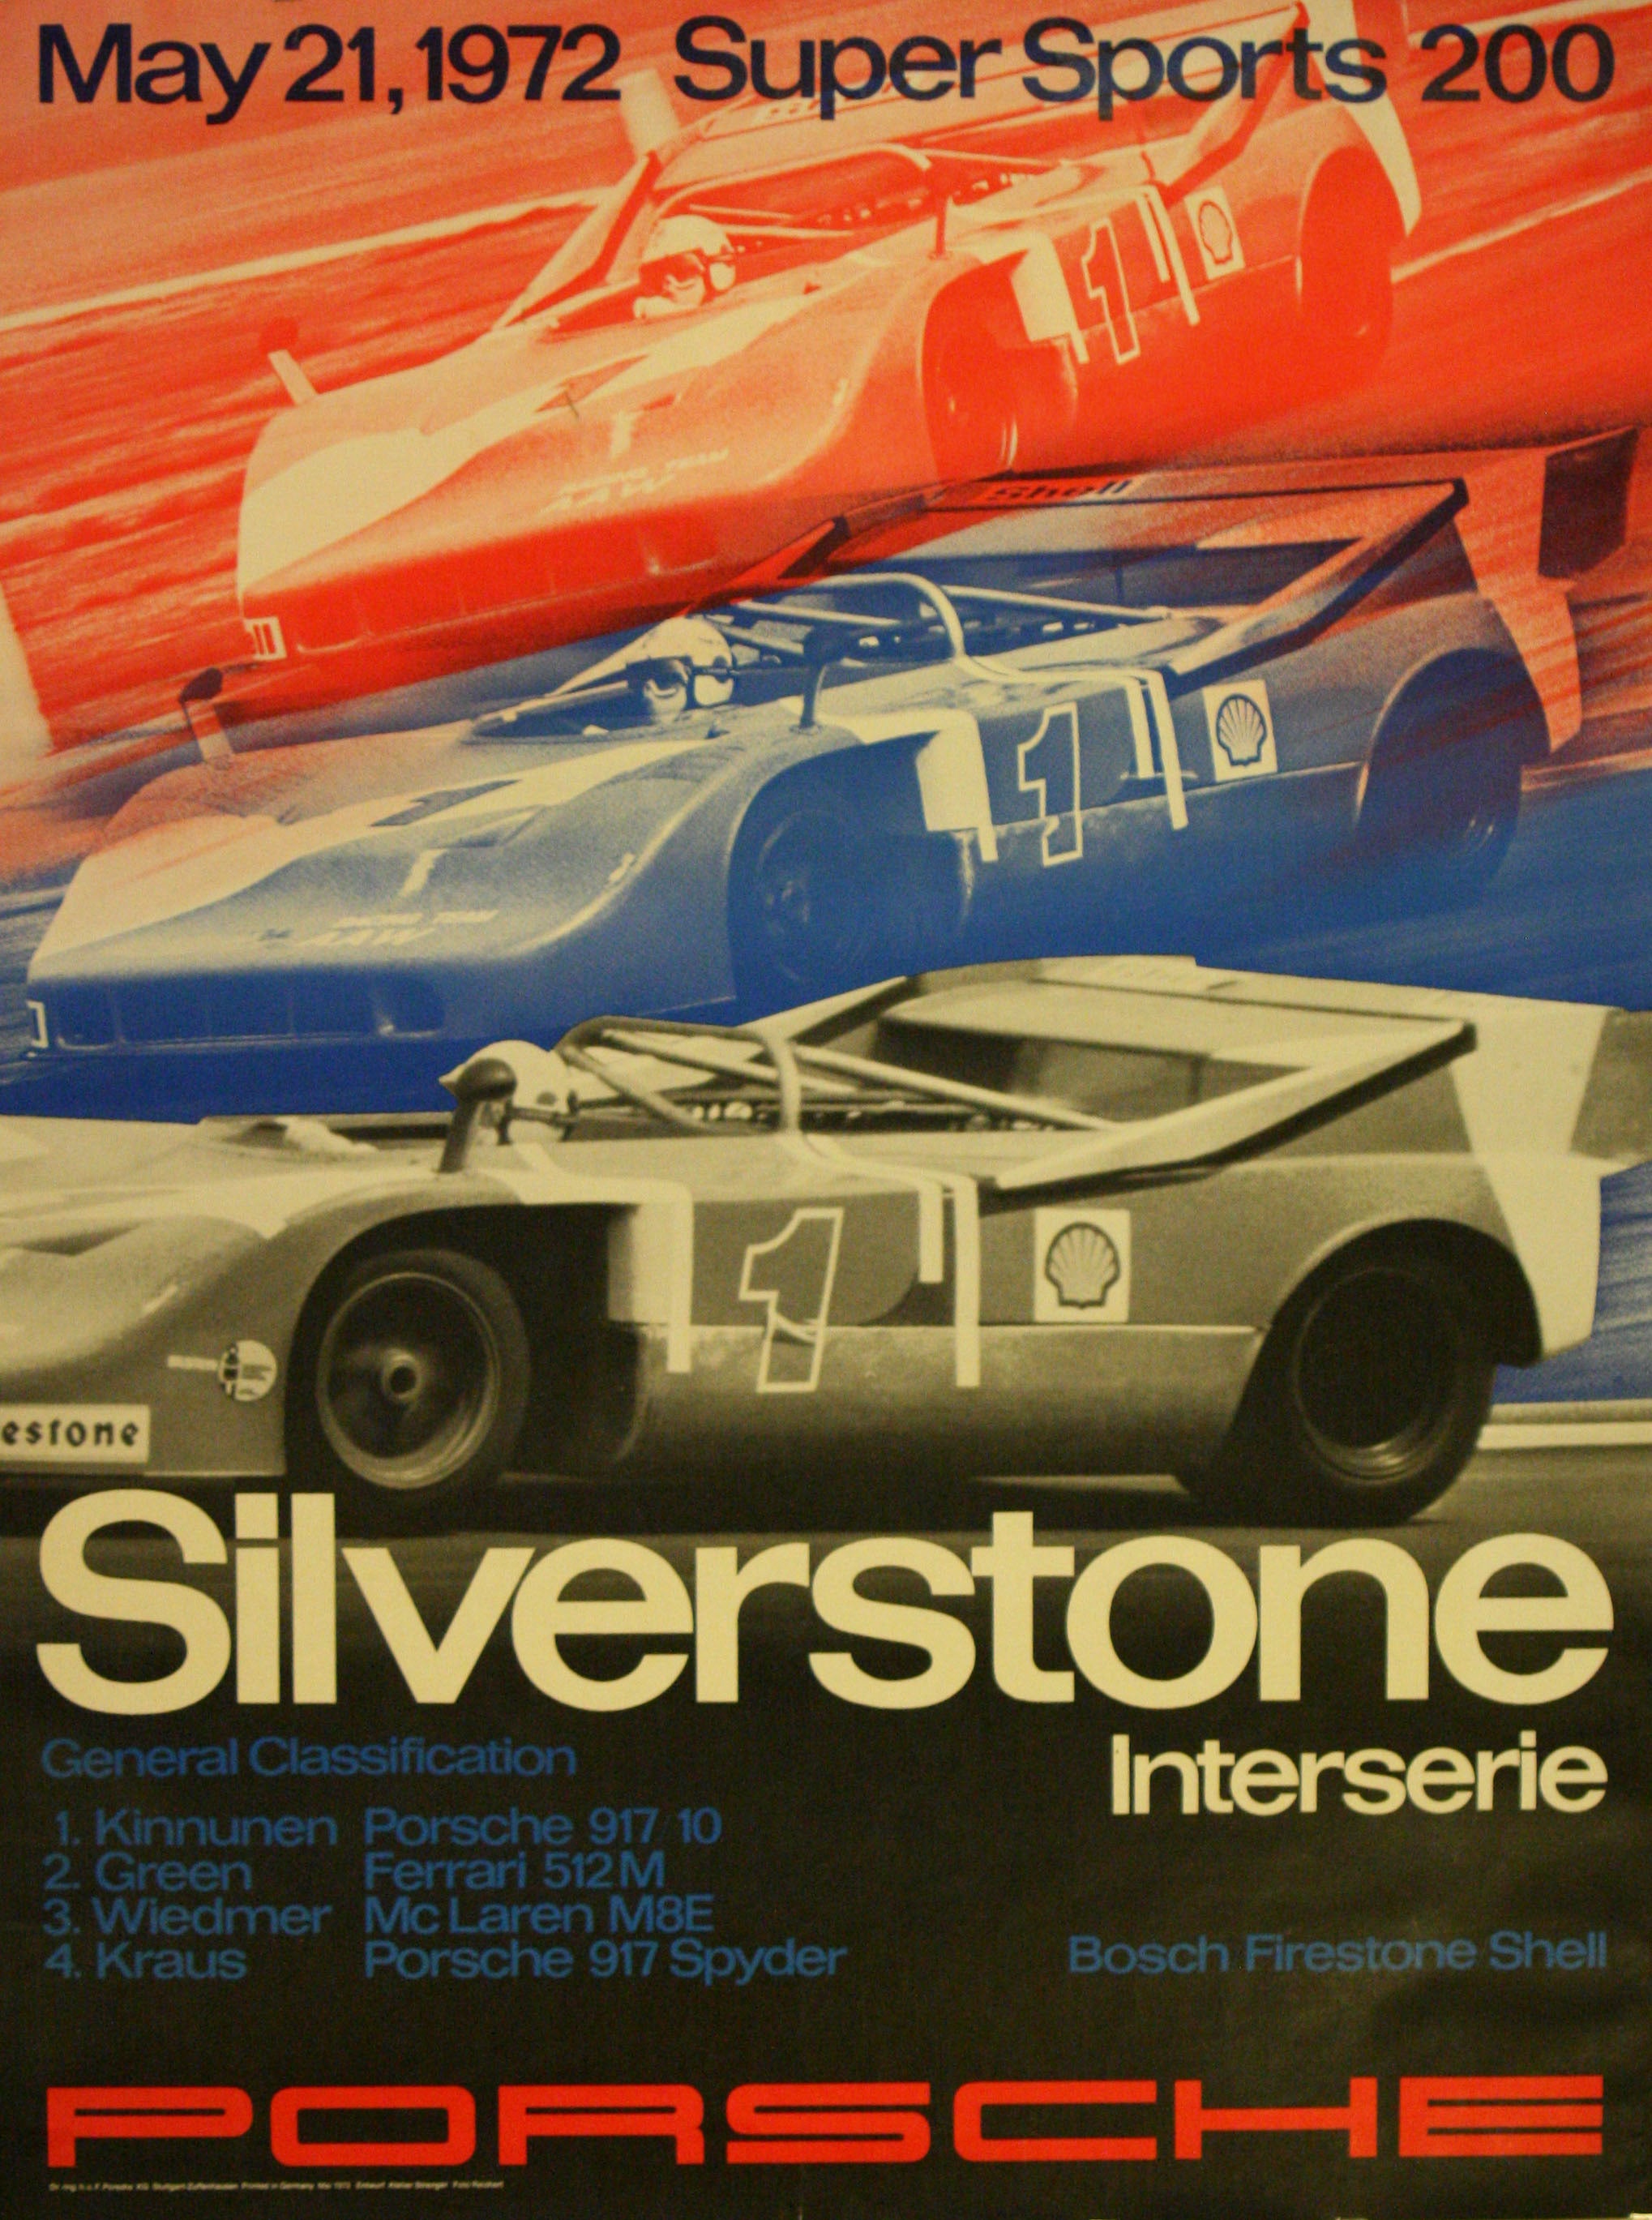 Original Vintage Car Racing Poster For Porsche Silverstone 1972, Super Sports 200, Sponsored by Bosch Firestone Shell